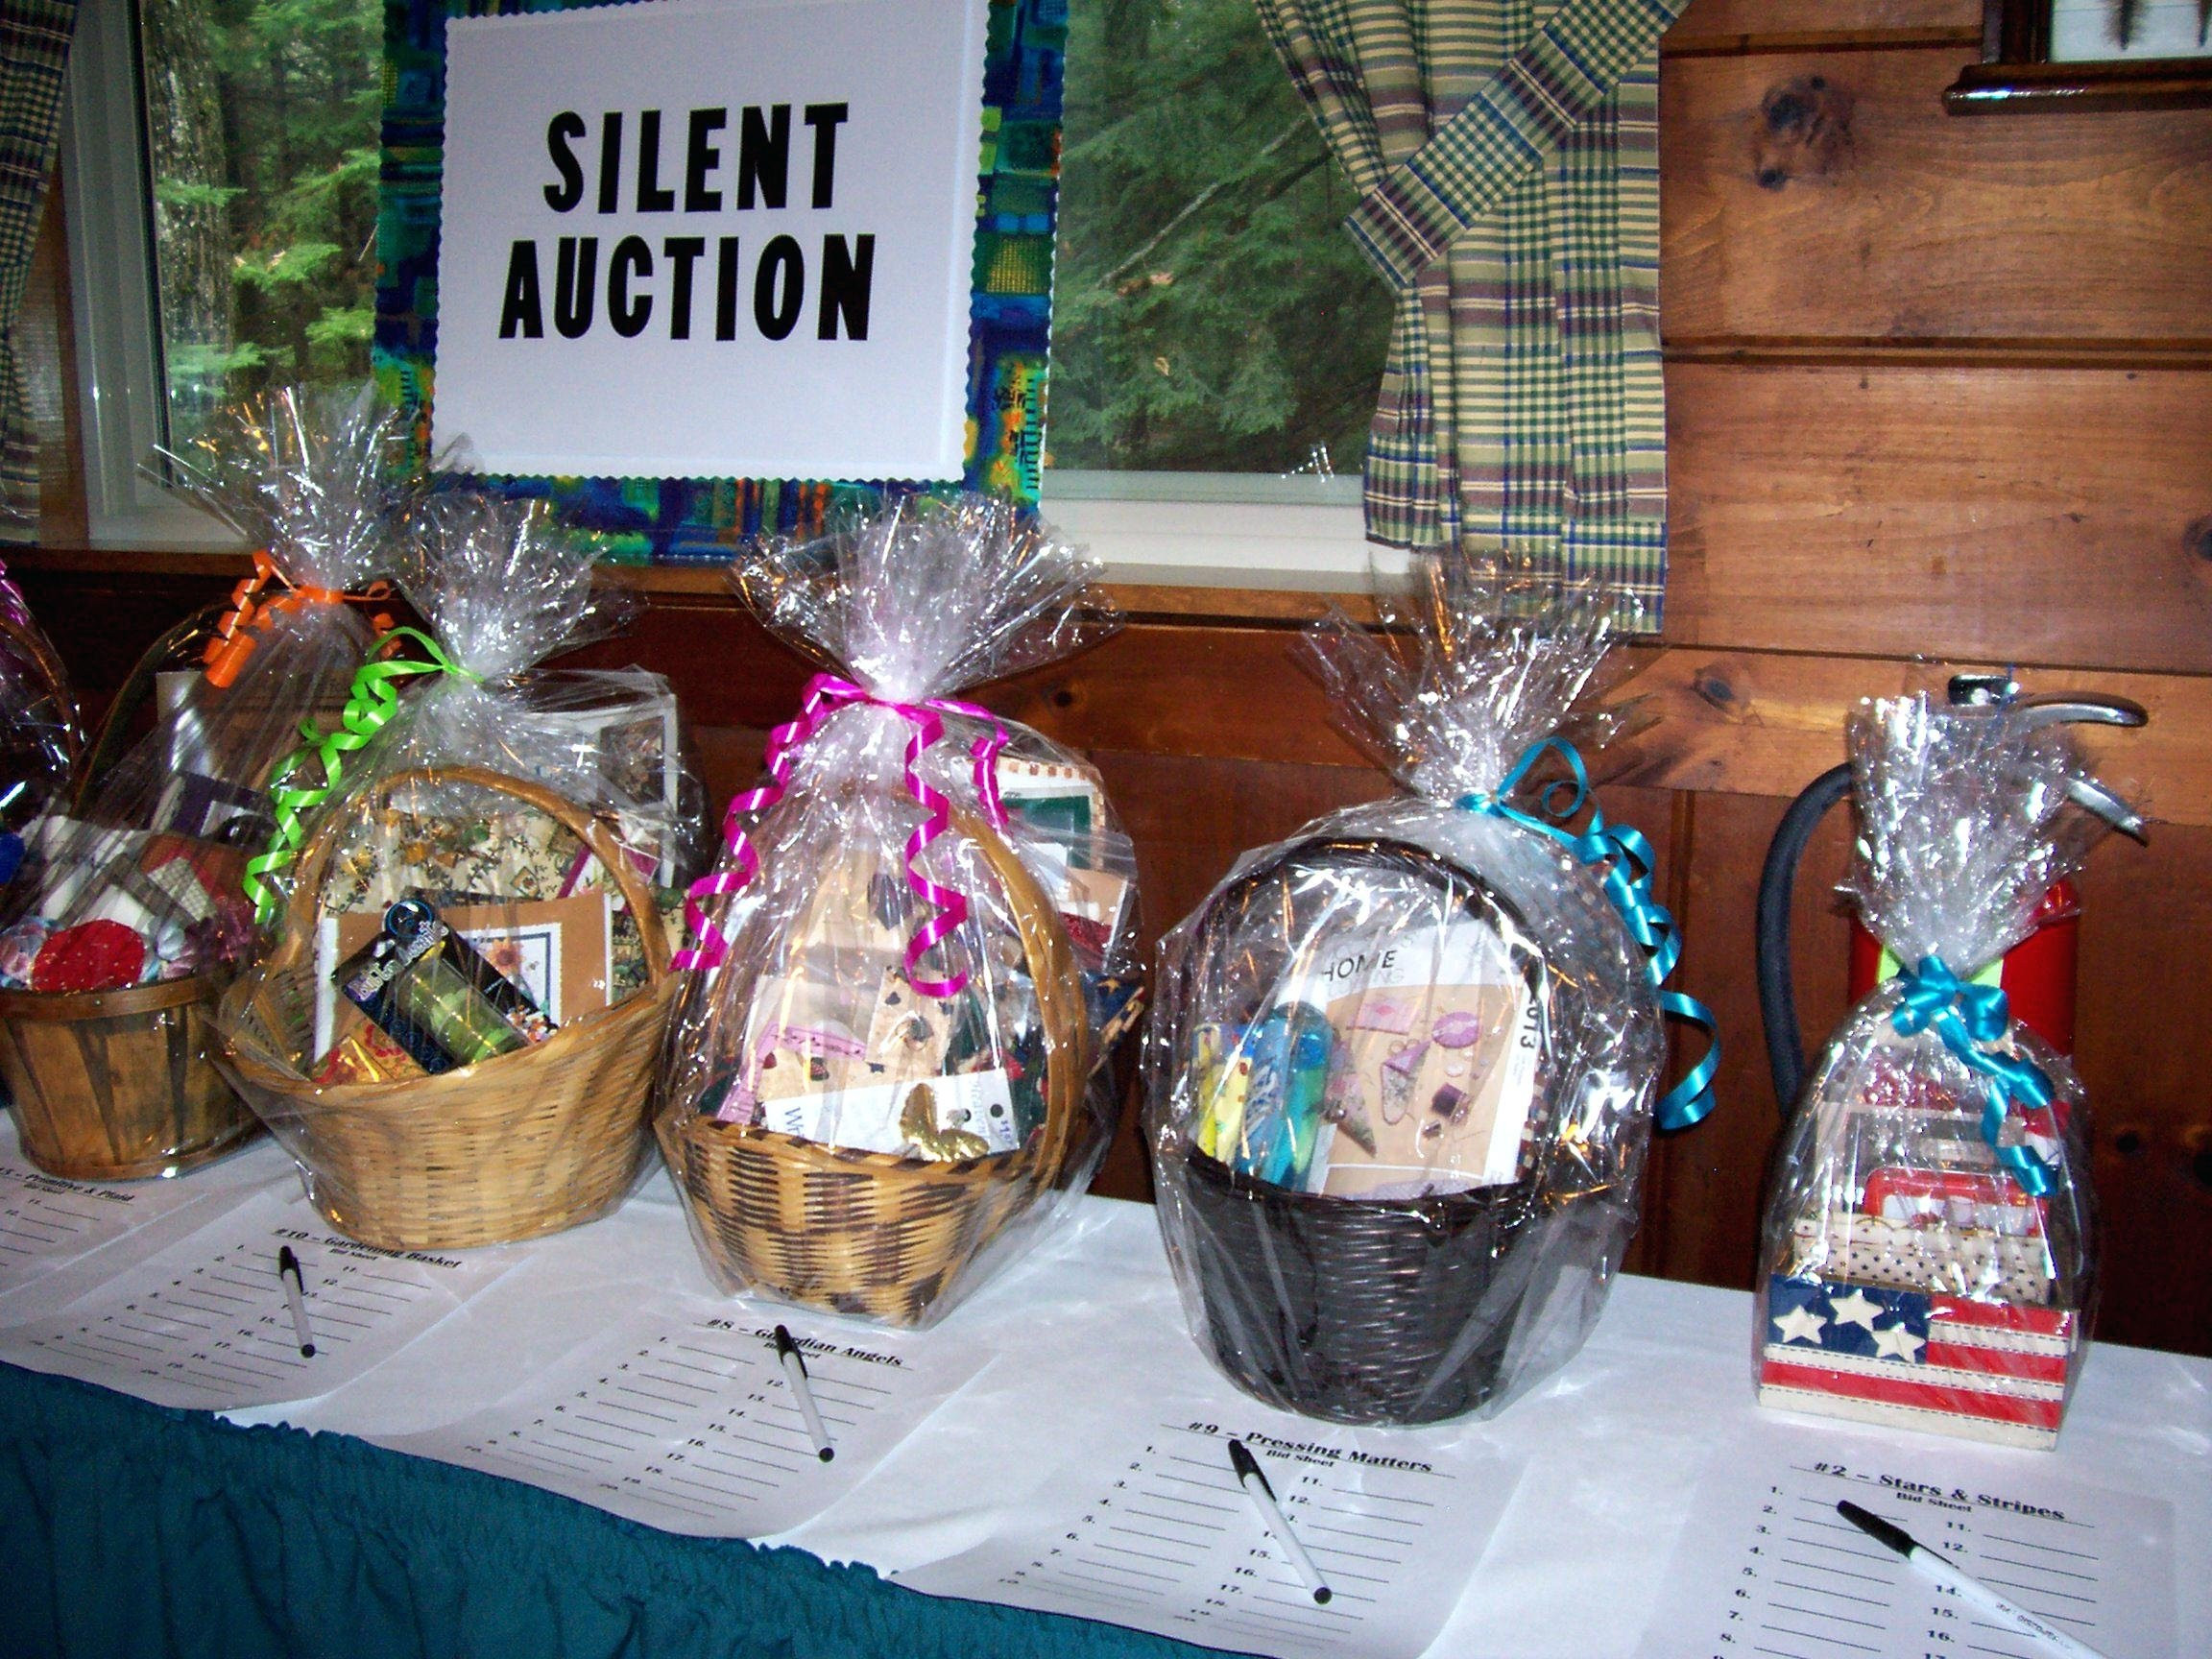 Auction Gift Basket Ideas
 10 Cute Theme Basket Ideas For Silent Auction 2019